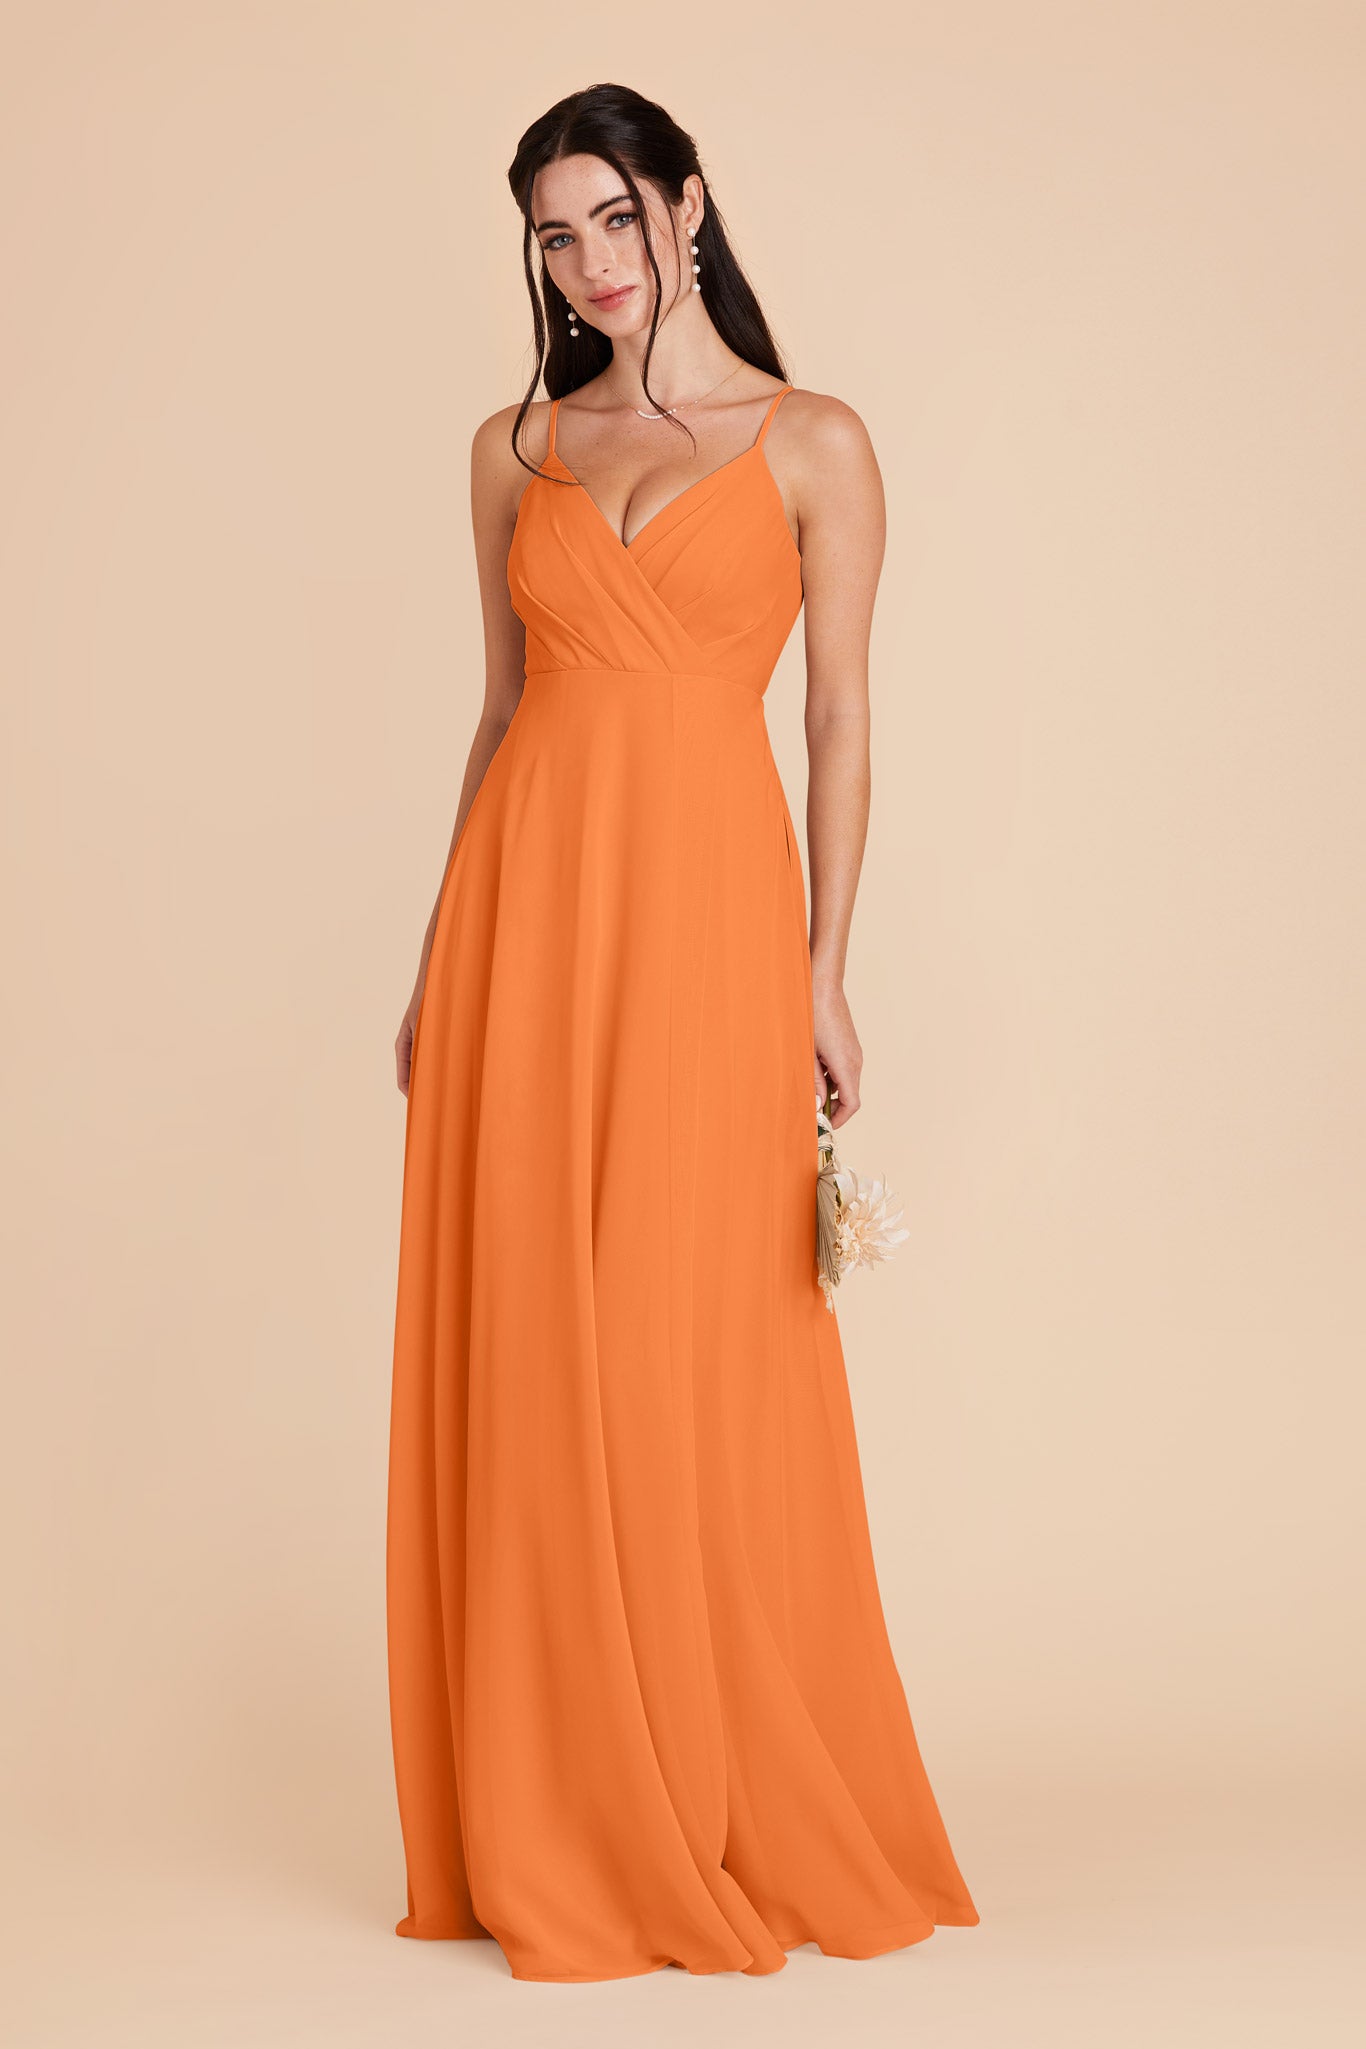 Apricot Kaia Chiffon Dress by Birdy Grey